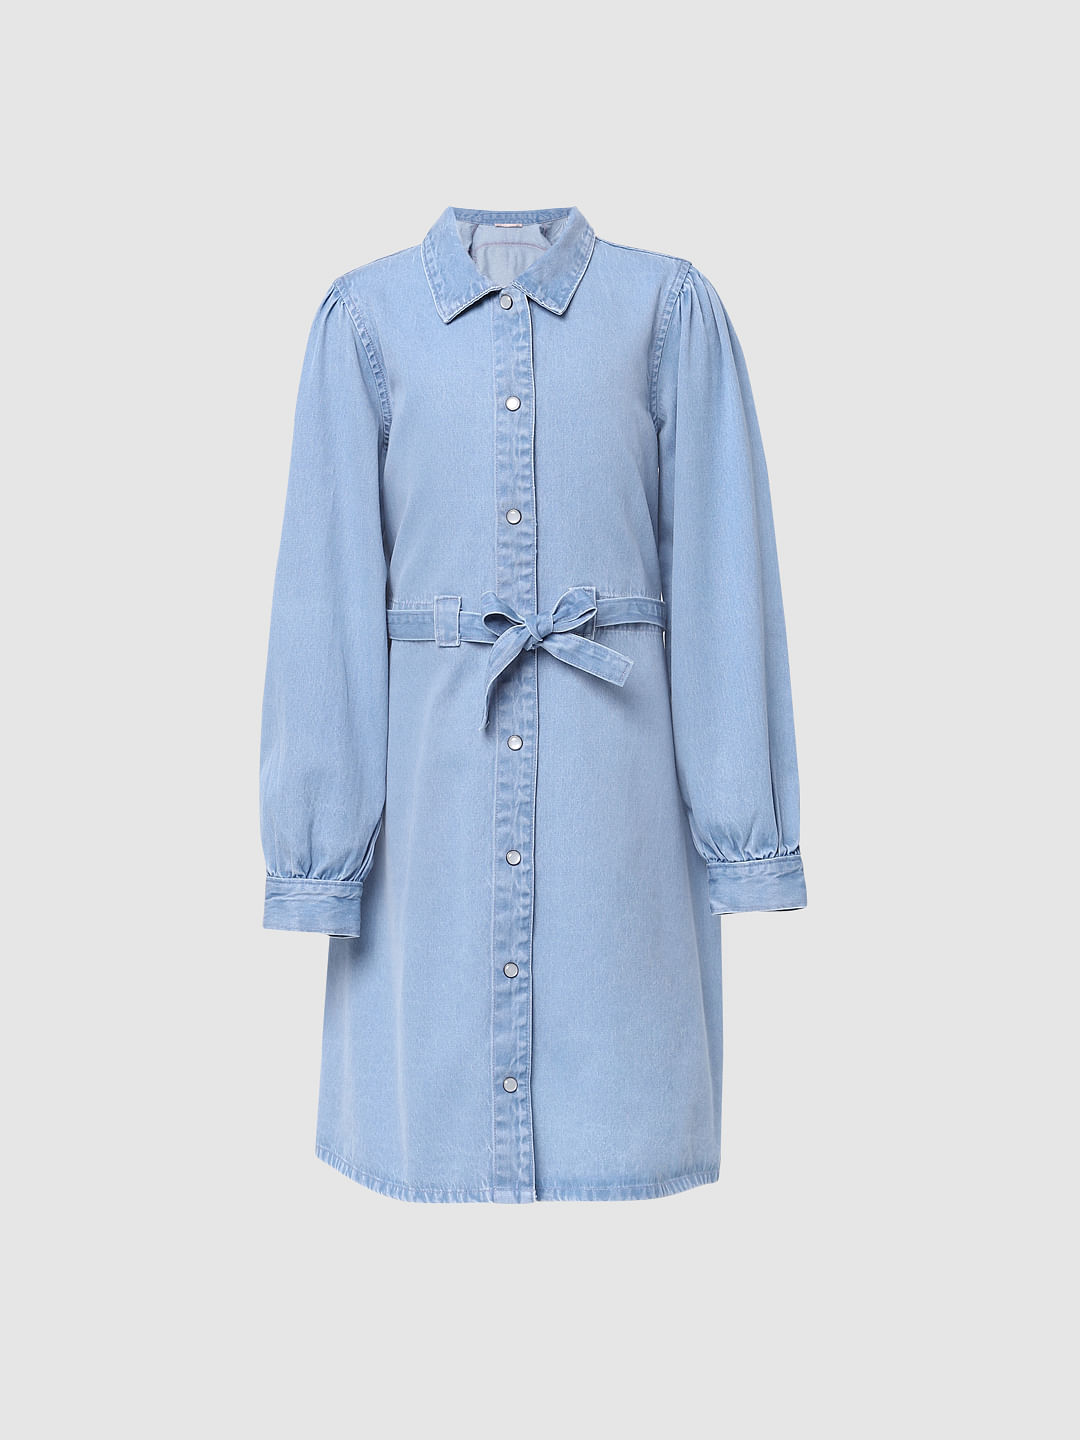 Buy StyleStone Womens Denim Dress with Shoulder Placket Blue at Amazonin